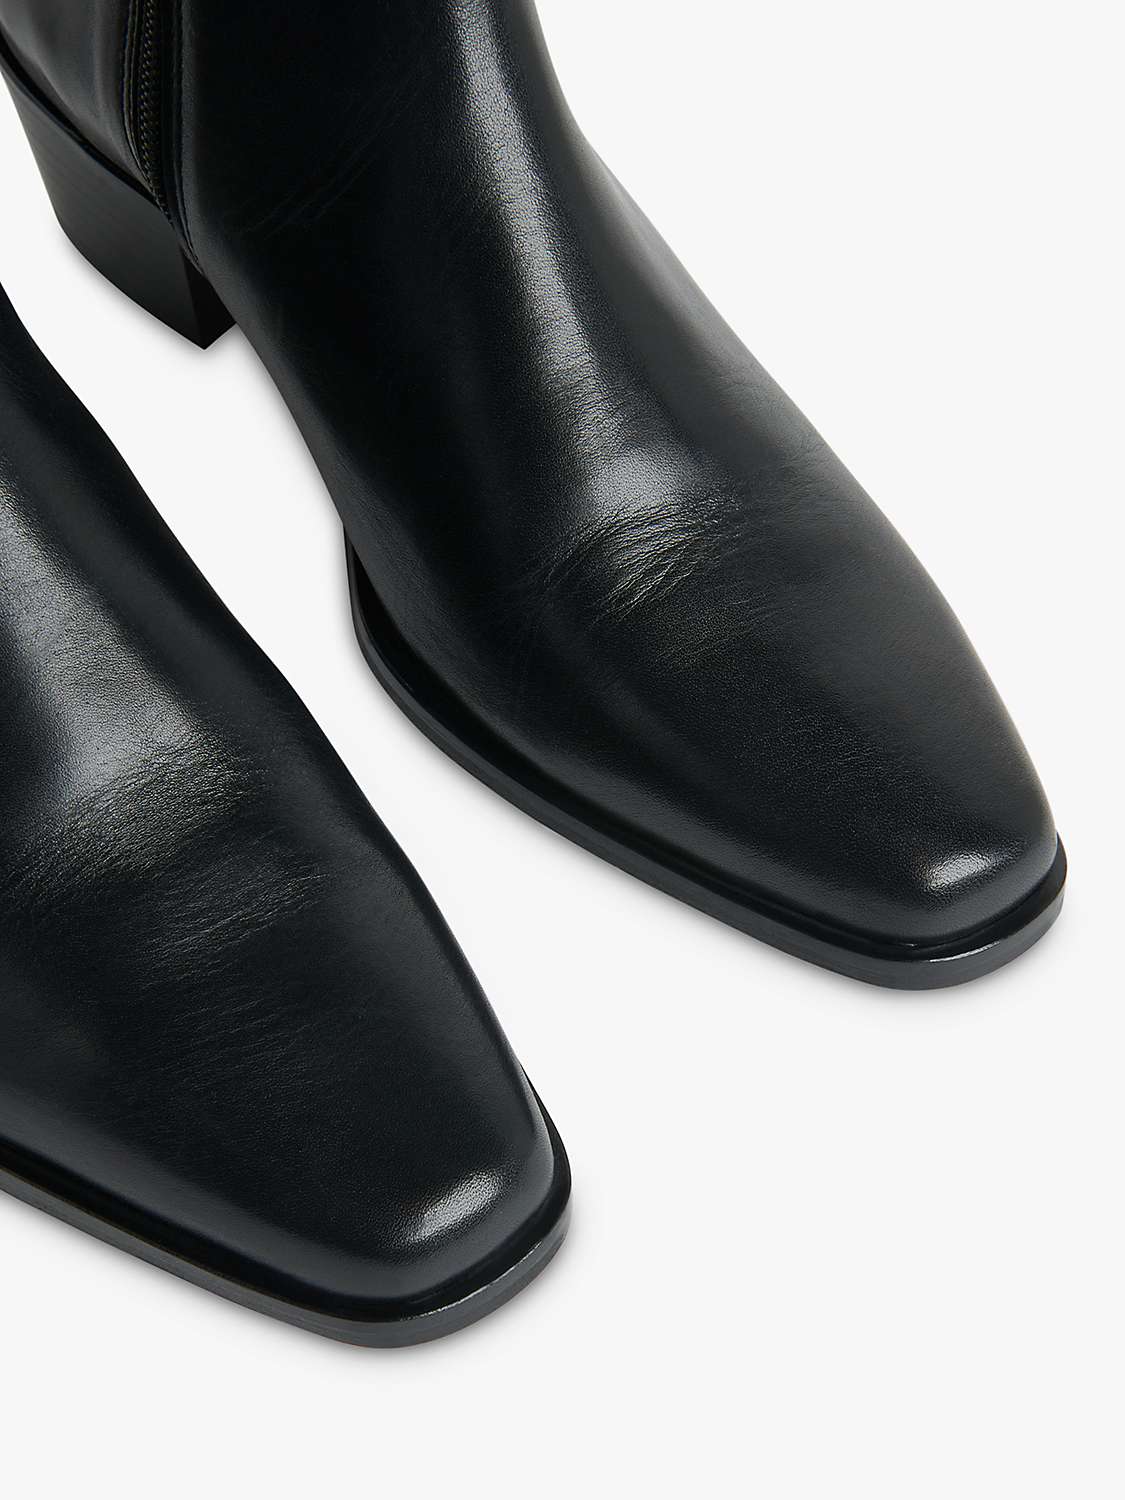 Buy Whistles Kara Leather Ankle Boots, Black Online at johnlewis.com